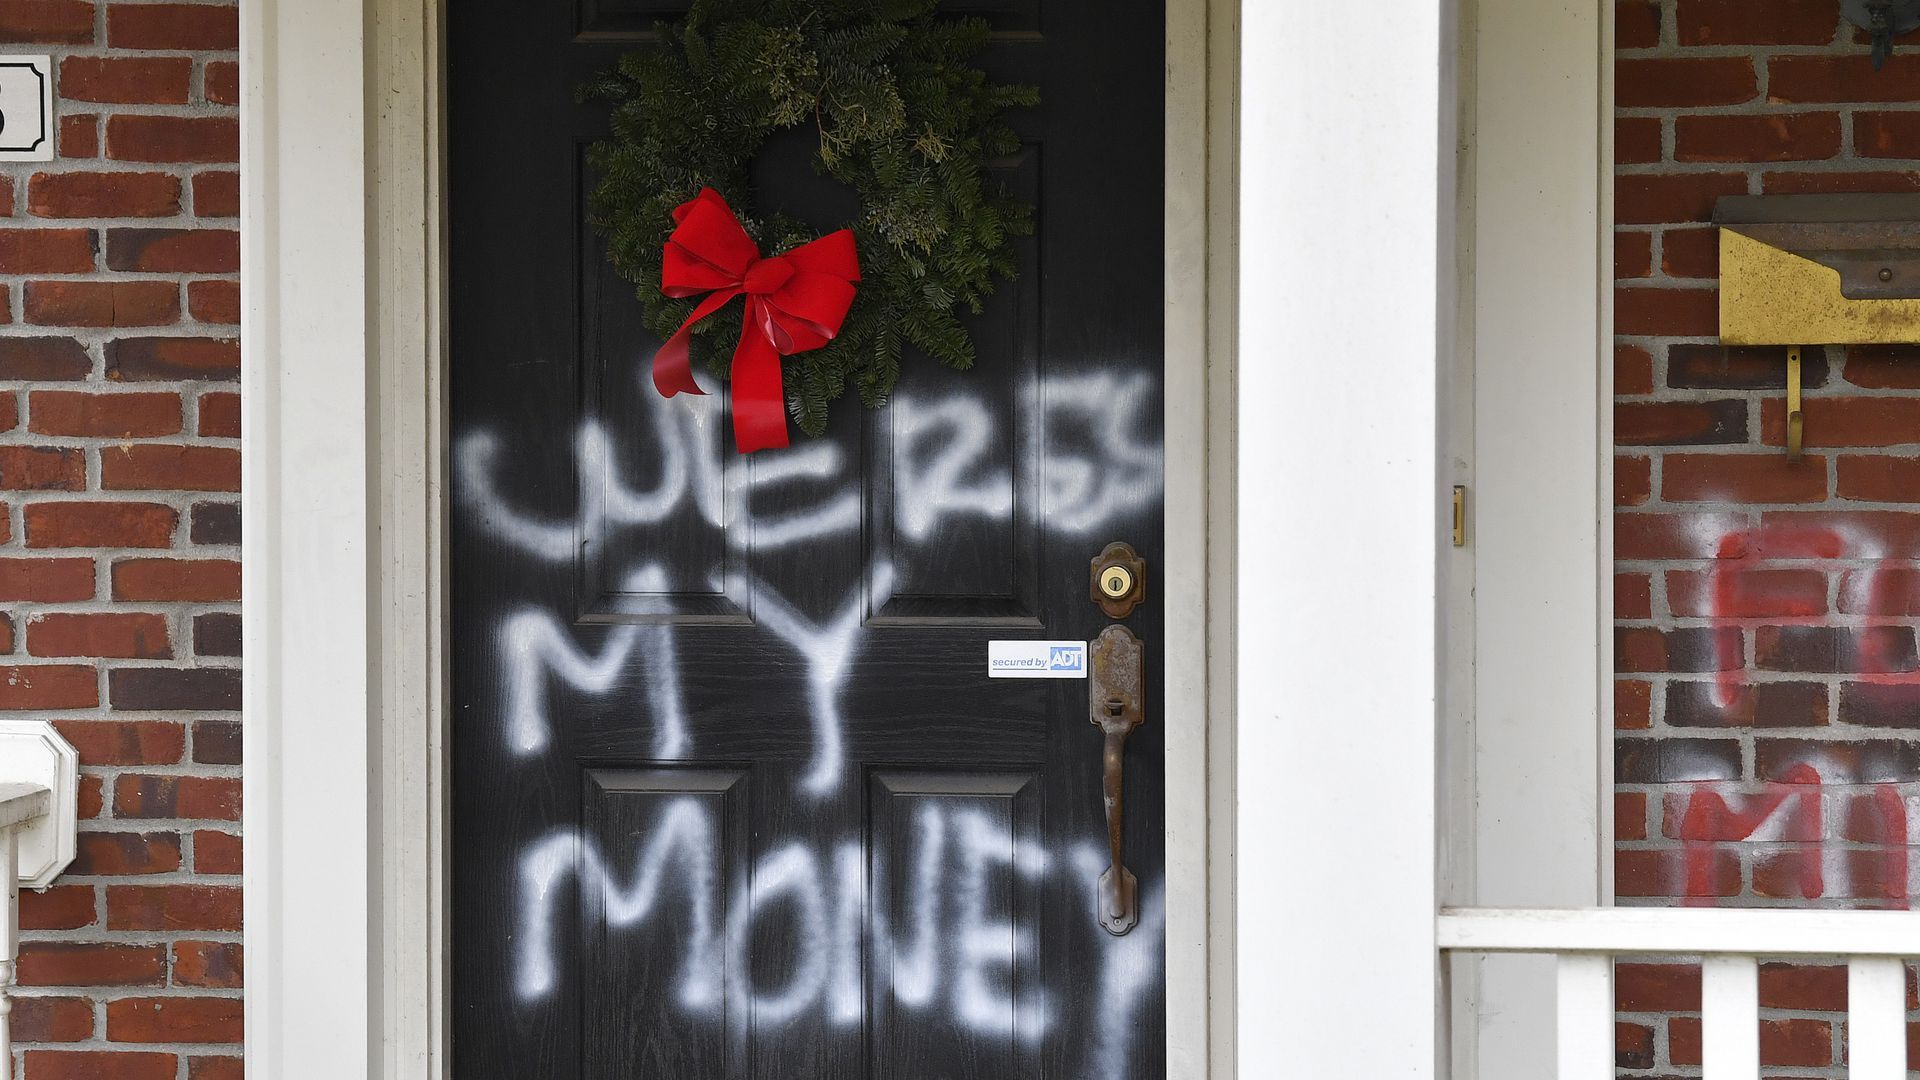 Vandalism at Nancy Pelosi's house.